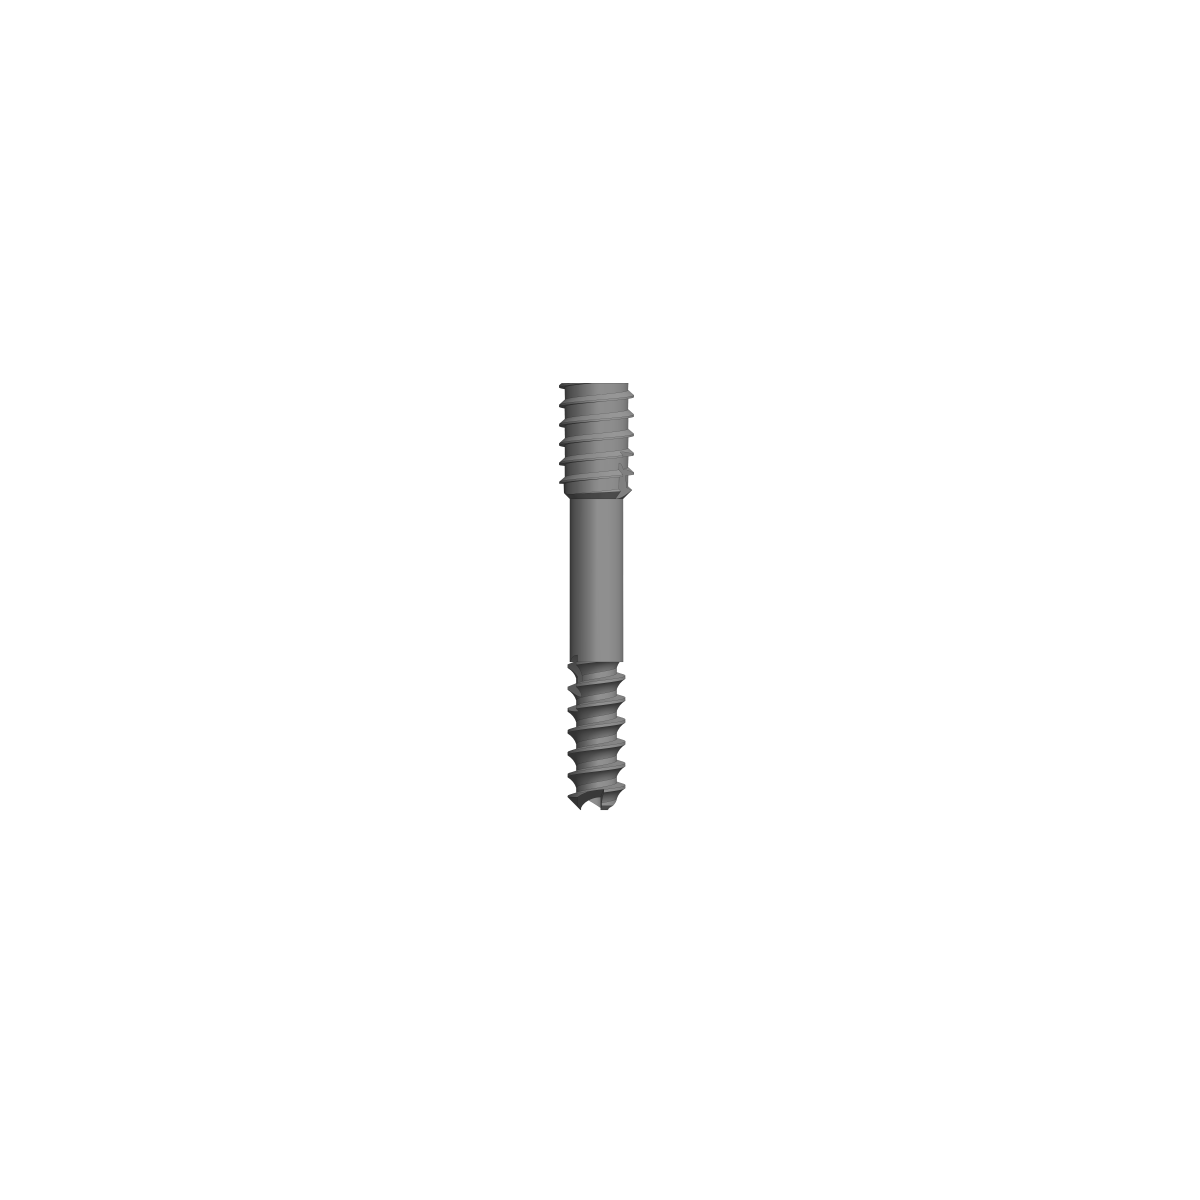 2.7mm / 3.5mm Cannulated Screw - Titanium